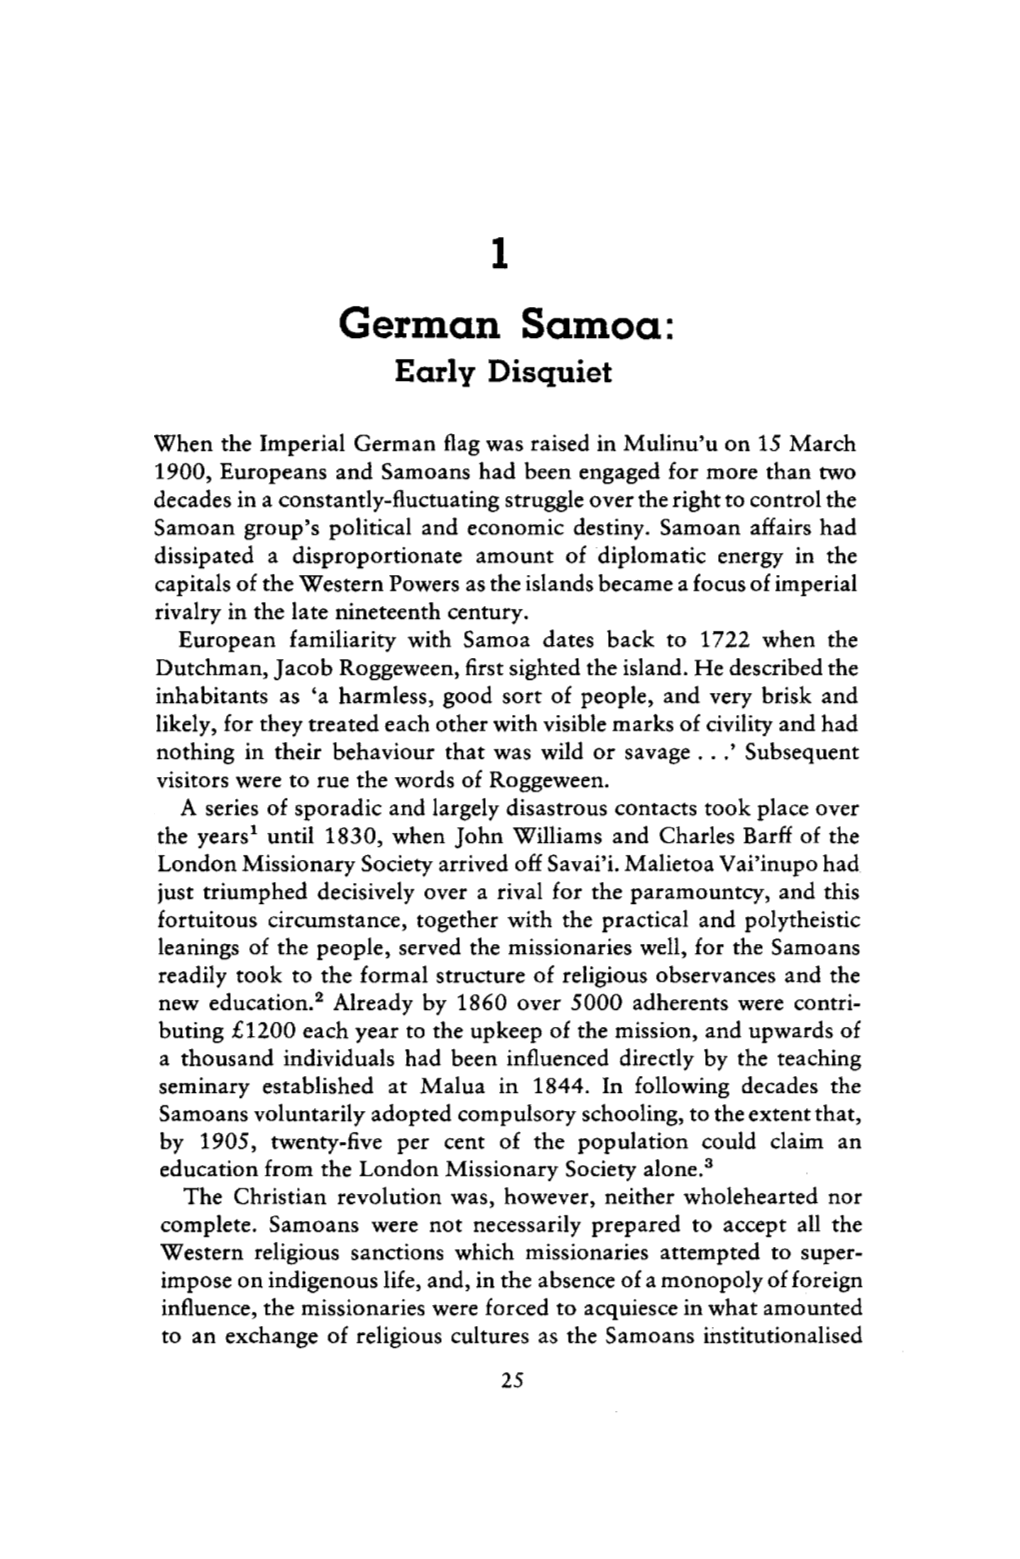 German Samoa: Early Disquiet